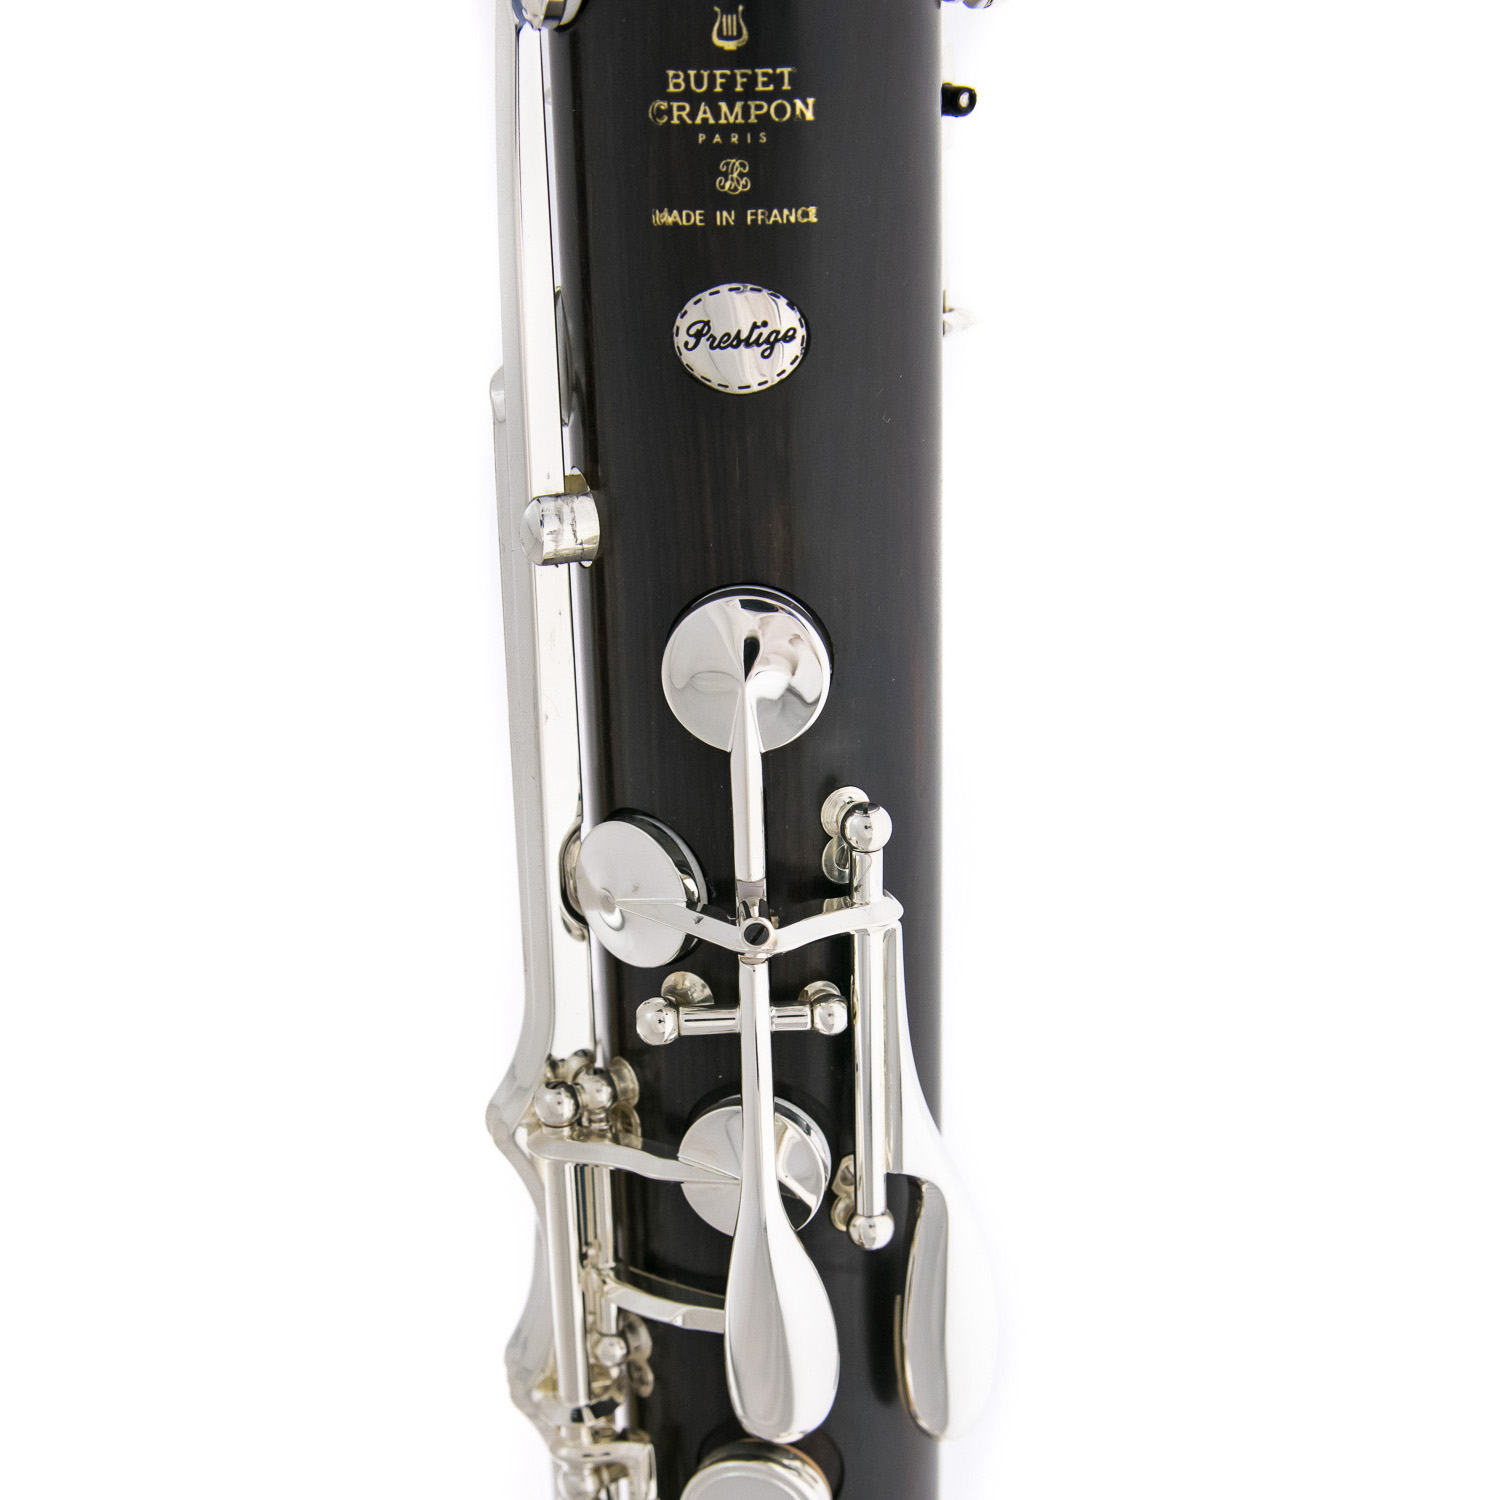 Buffet Crampon Bass Clarinet - 1193 Prestige to low C